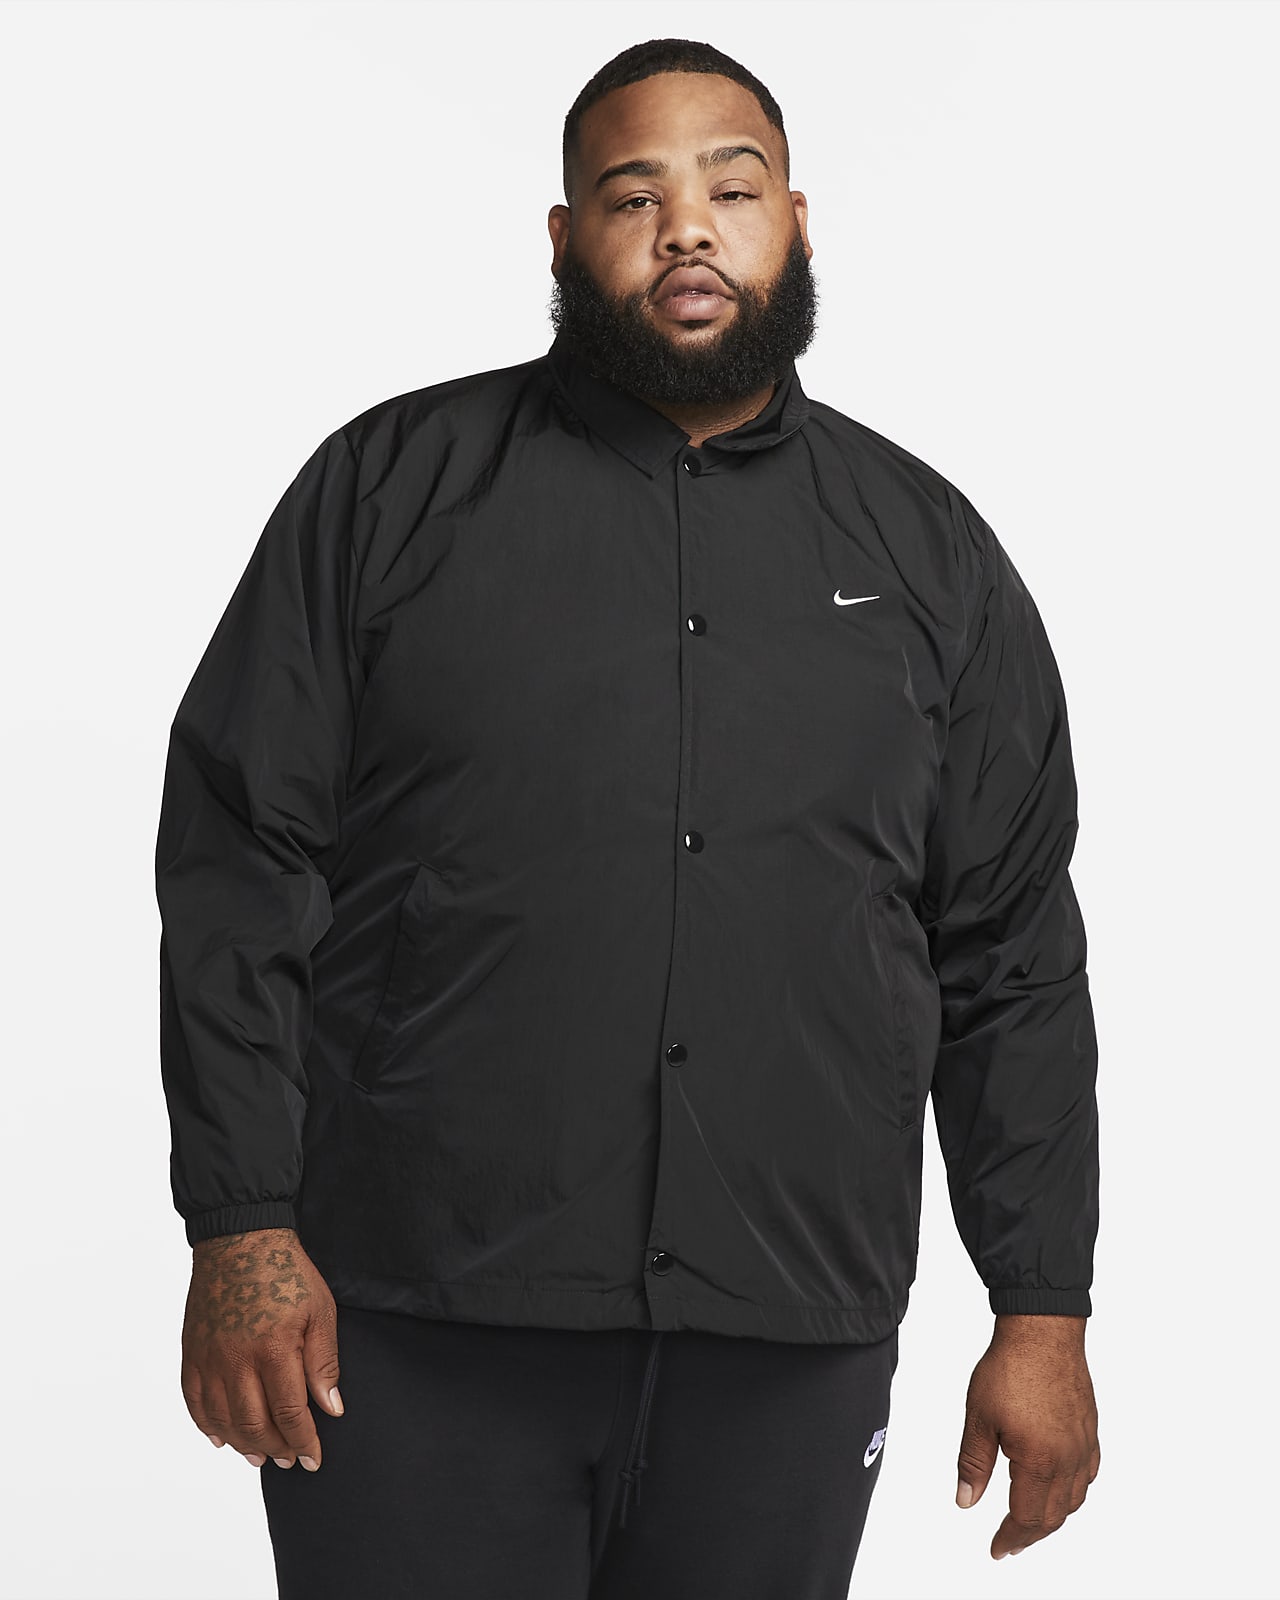 Nike Sportswear Authentics Men's Coaches Jacket. Nike NL